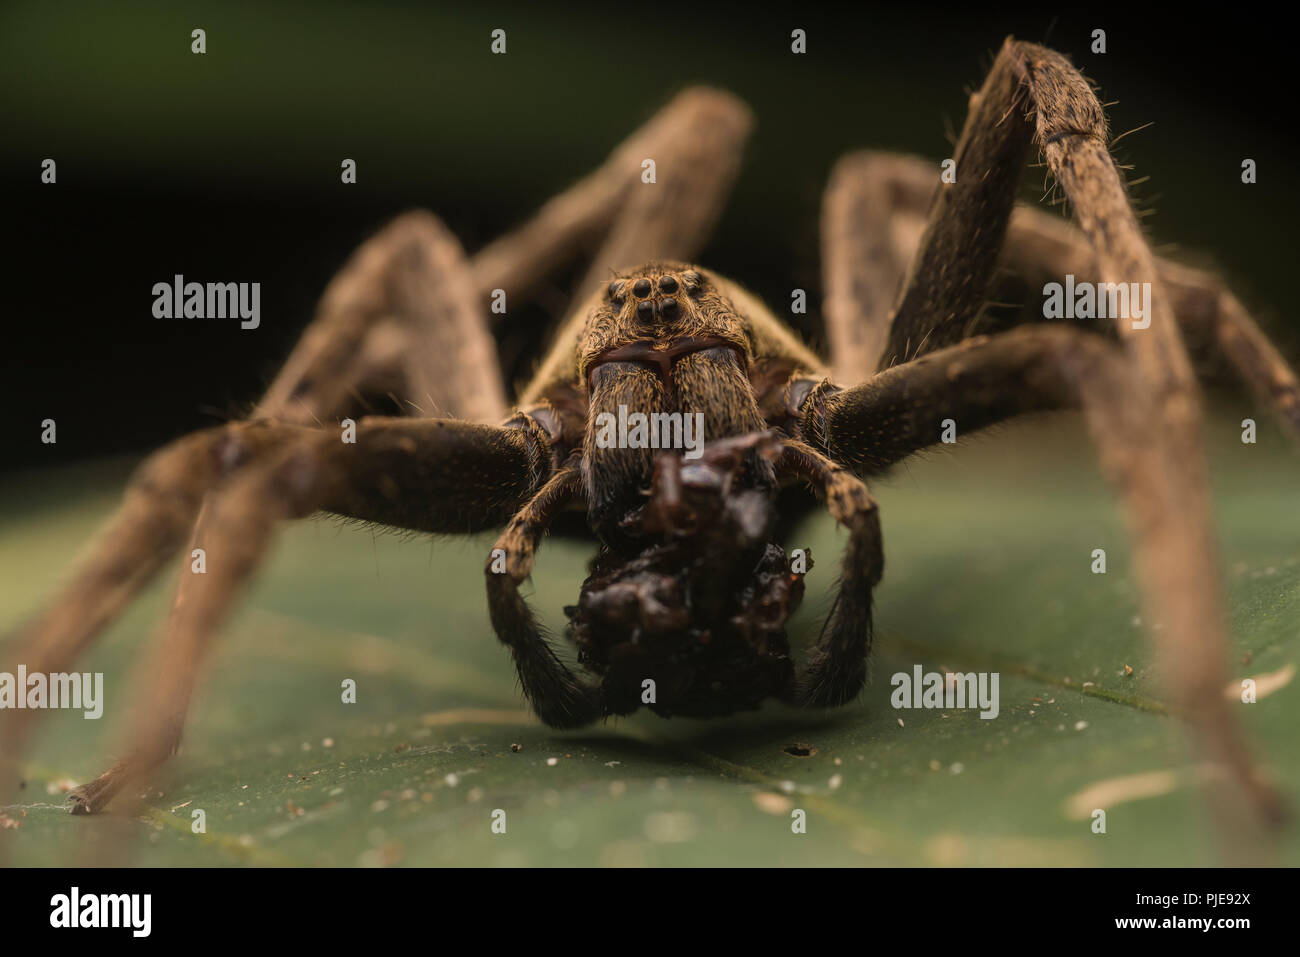 A huntsman spider (Family Ctenidae) eating some unfortunate prey item in the Peruvian jungle. Stock Photo